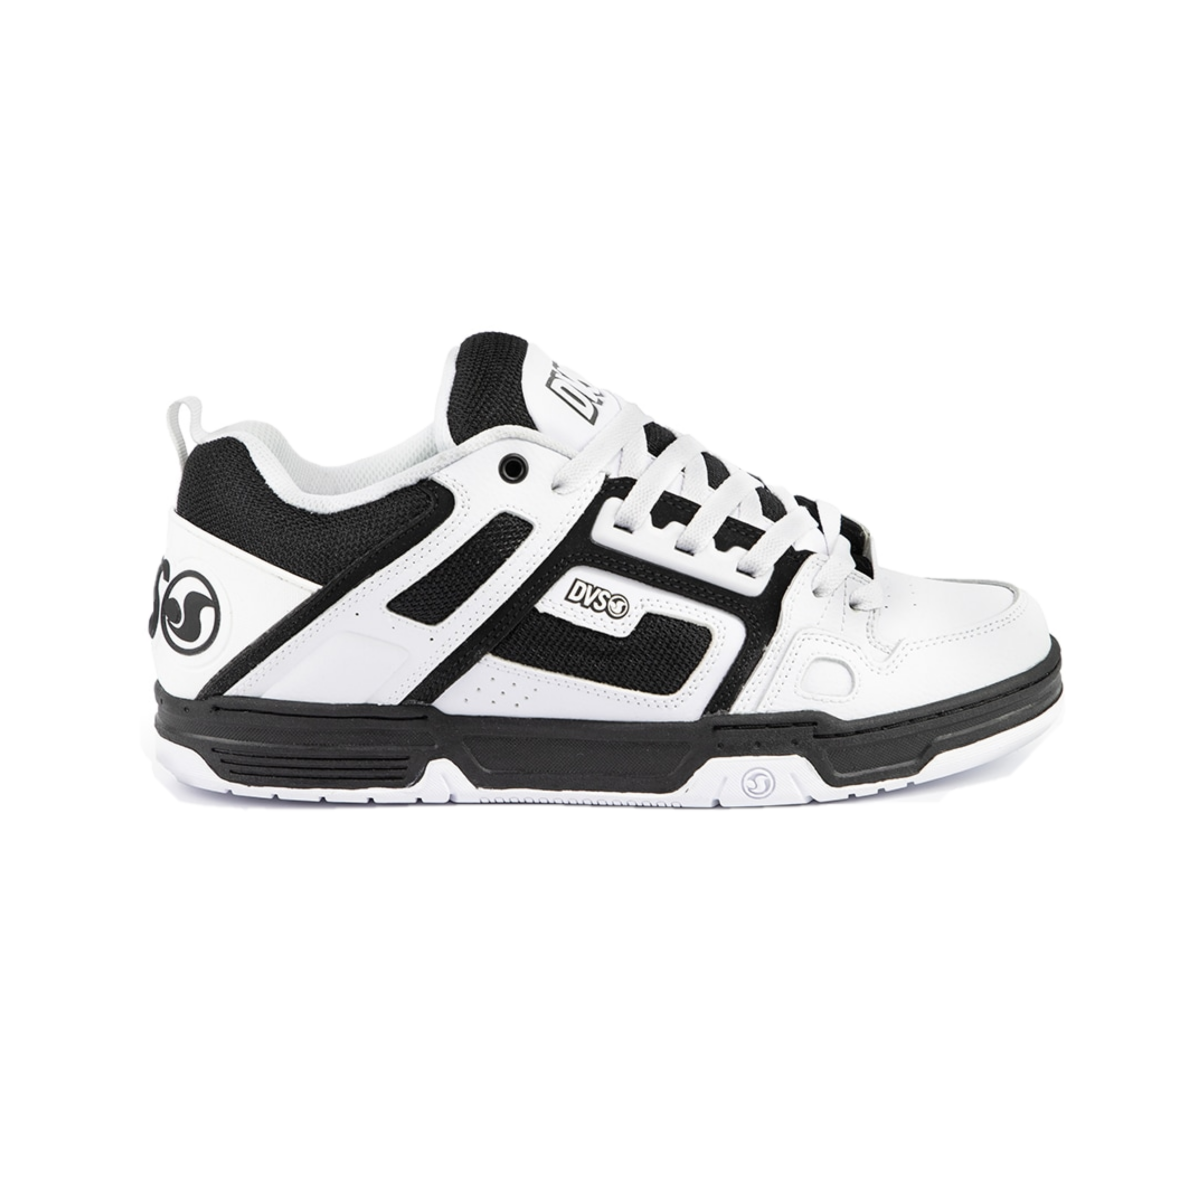 DVS F0000029116 COMANCHE MN'S (Medium) White/Black/White Leather & Nubuck Skate Shoes